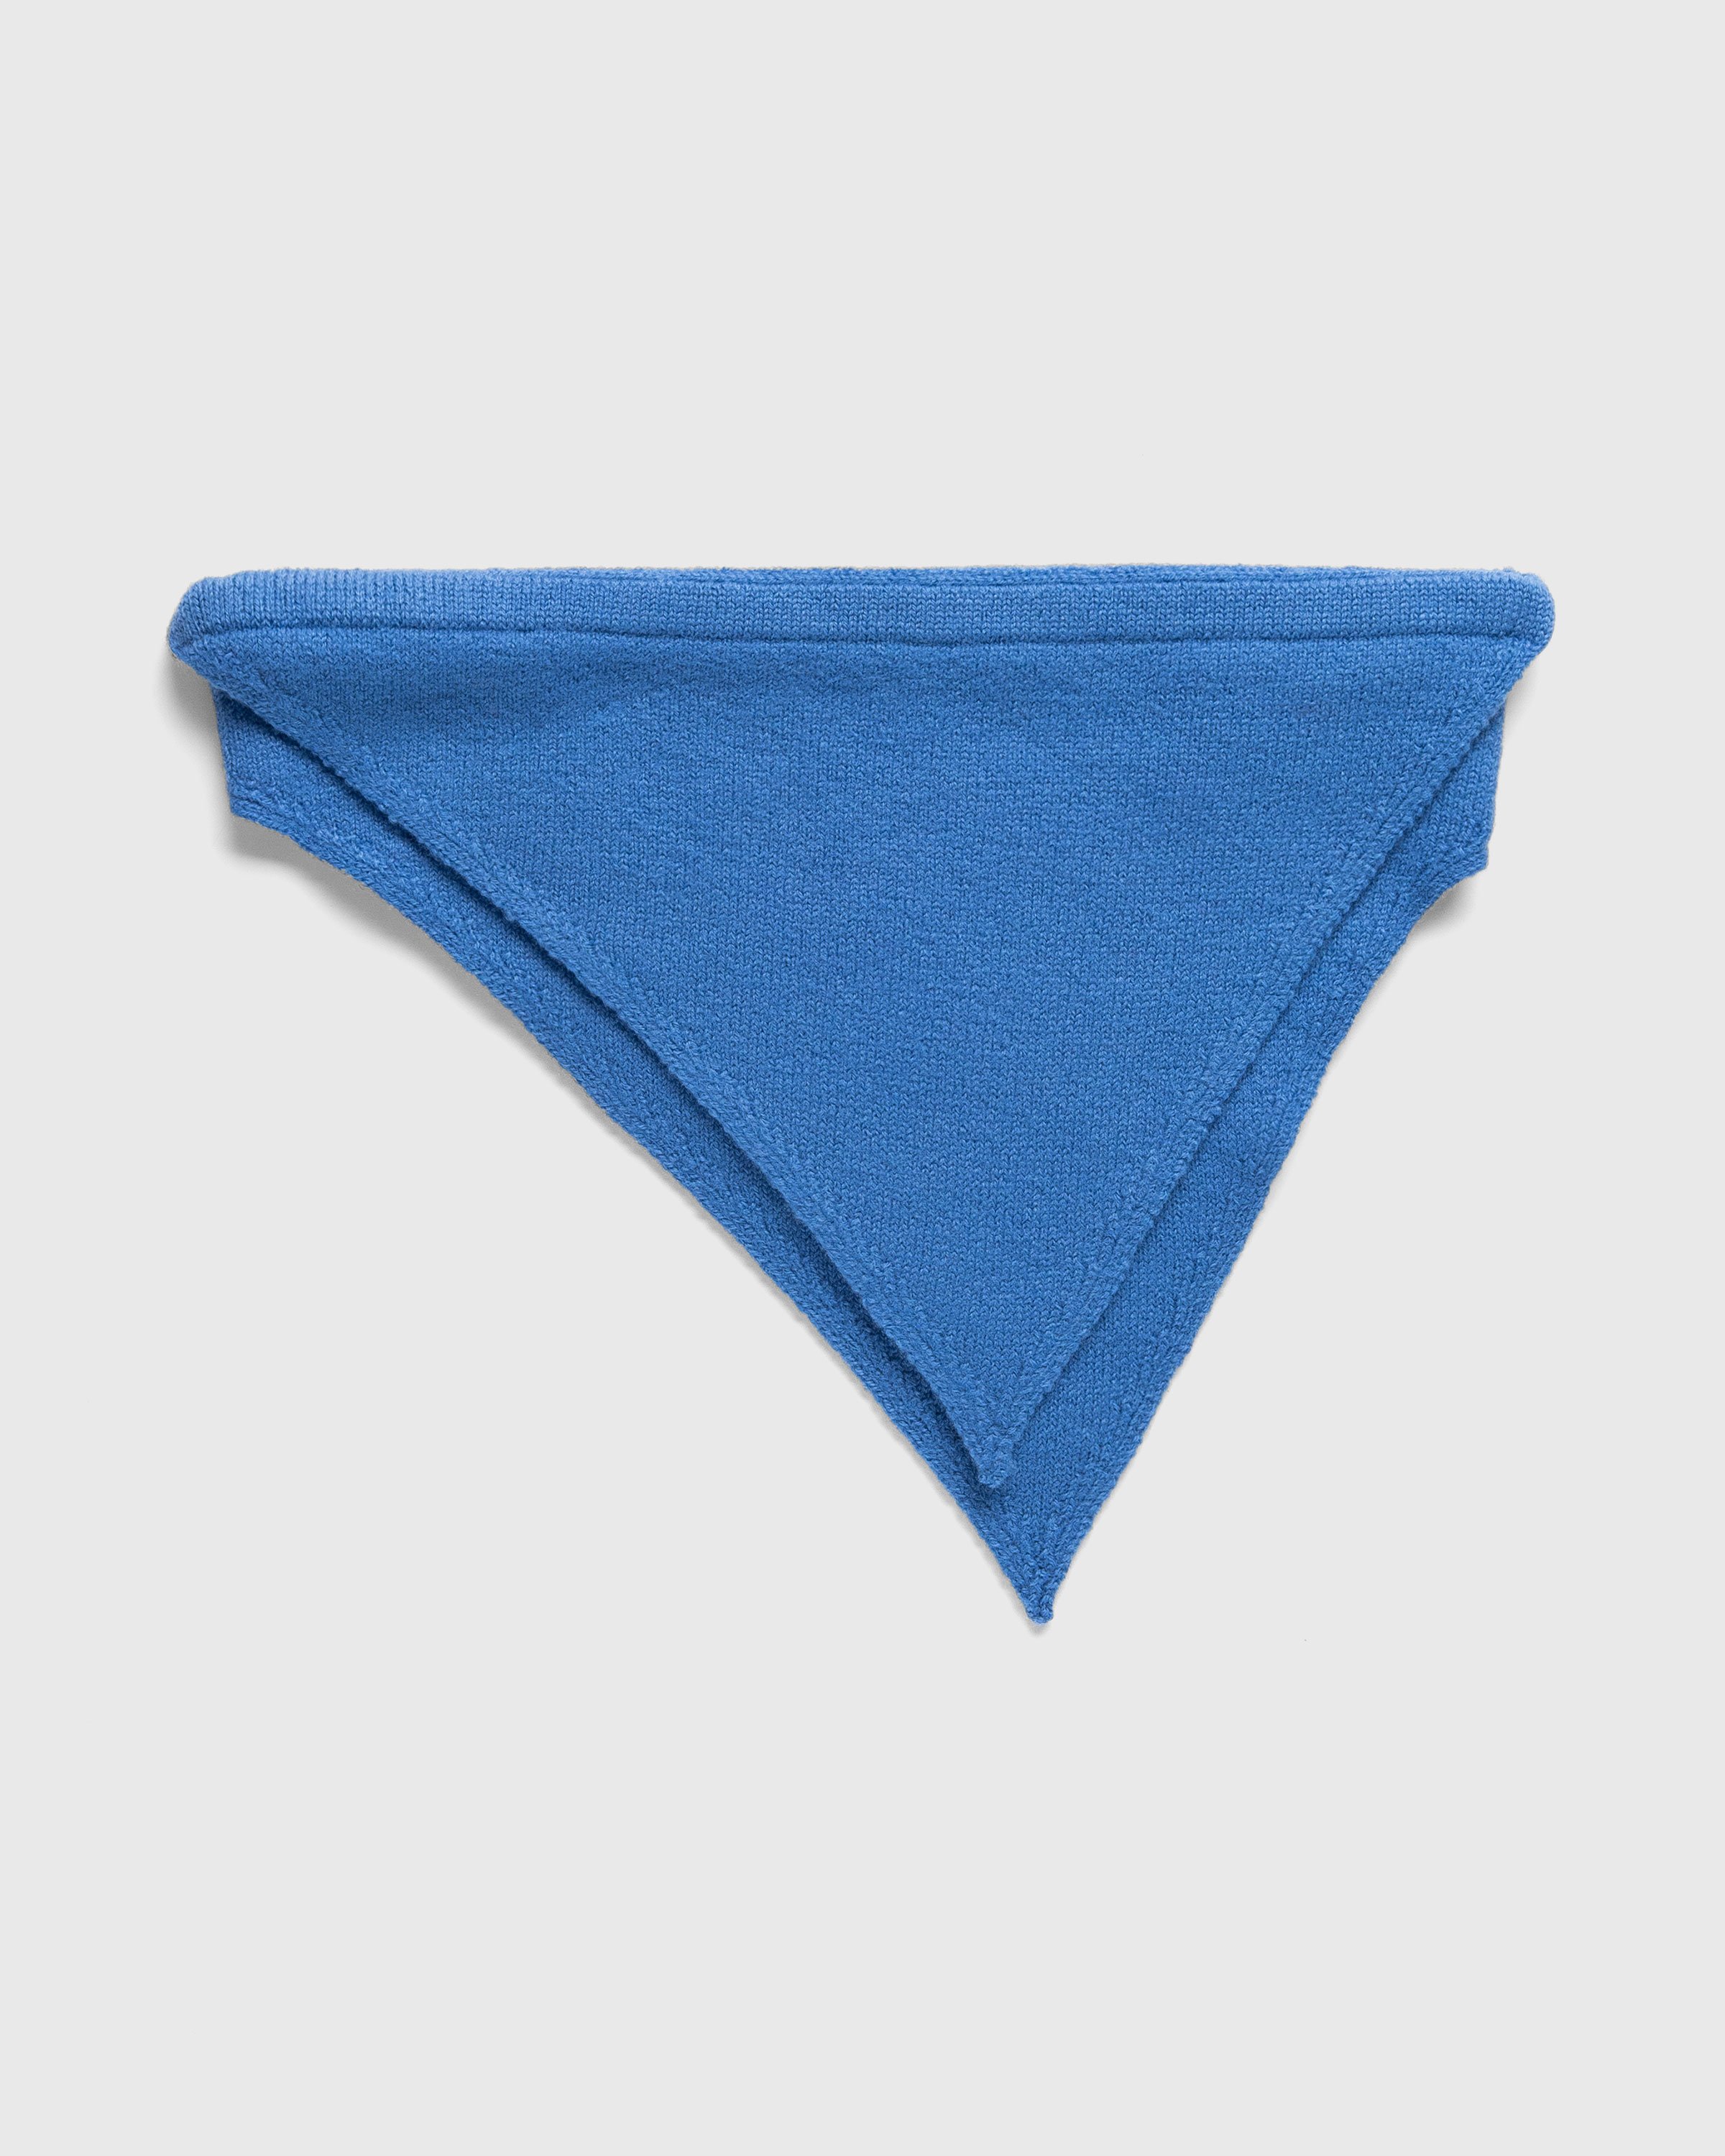 Jil Sander - Merino Foulard Cornflower - Accessories - Blue - Image 1